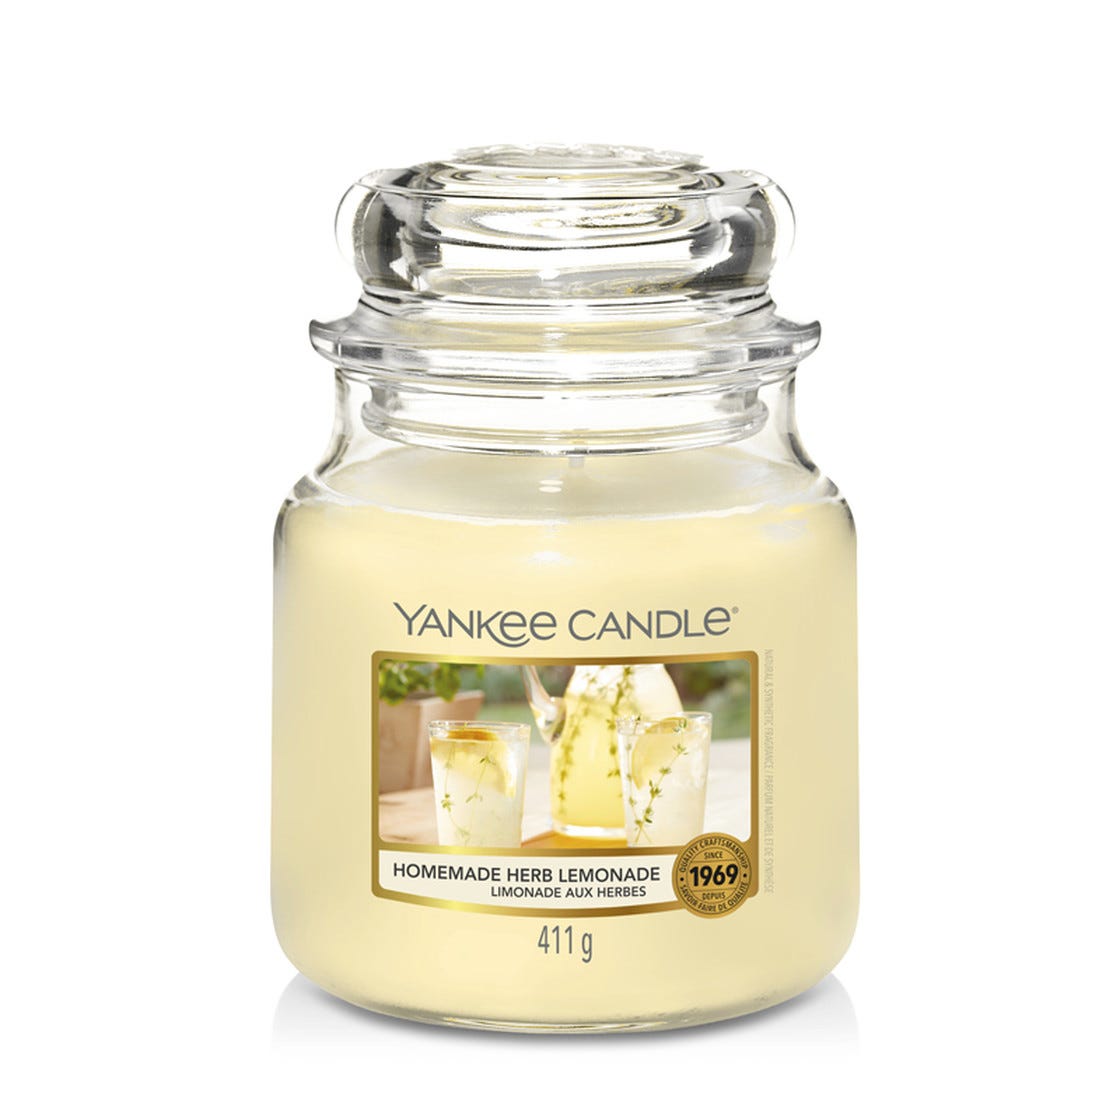 Yankee Candle Homemade Herb Lemonade Giara Media